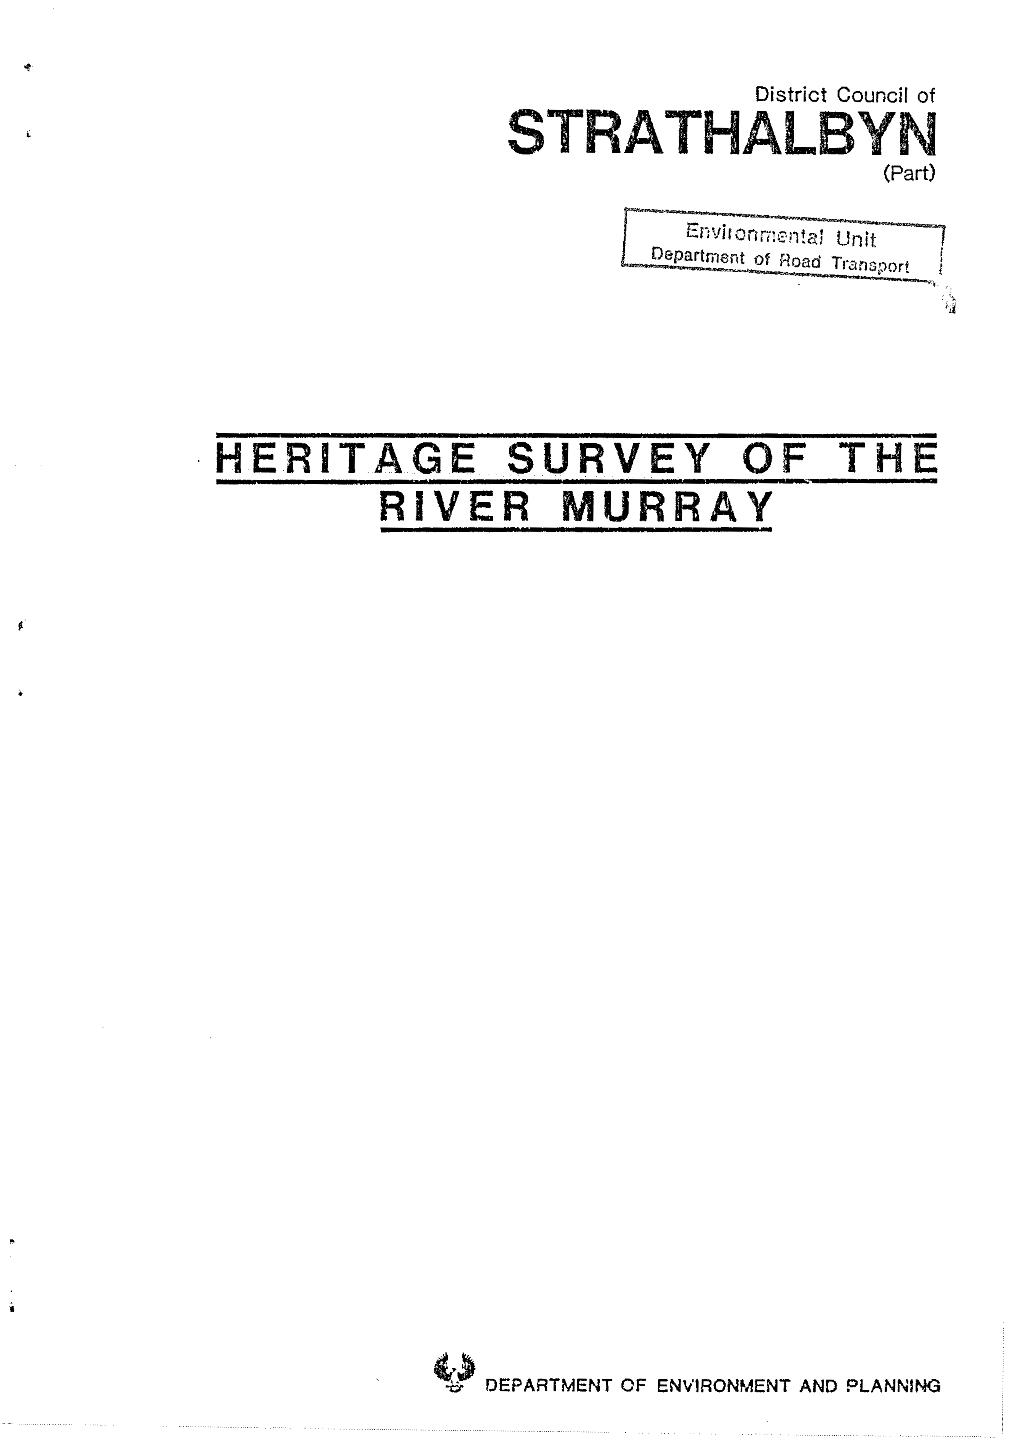 River-Murray-Heritage-Survey-DC-Strathalbyn-1984